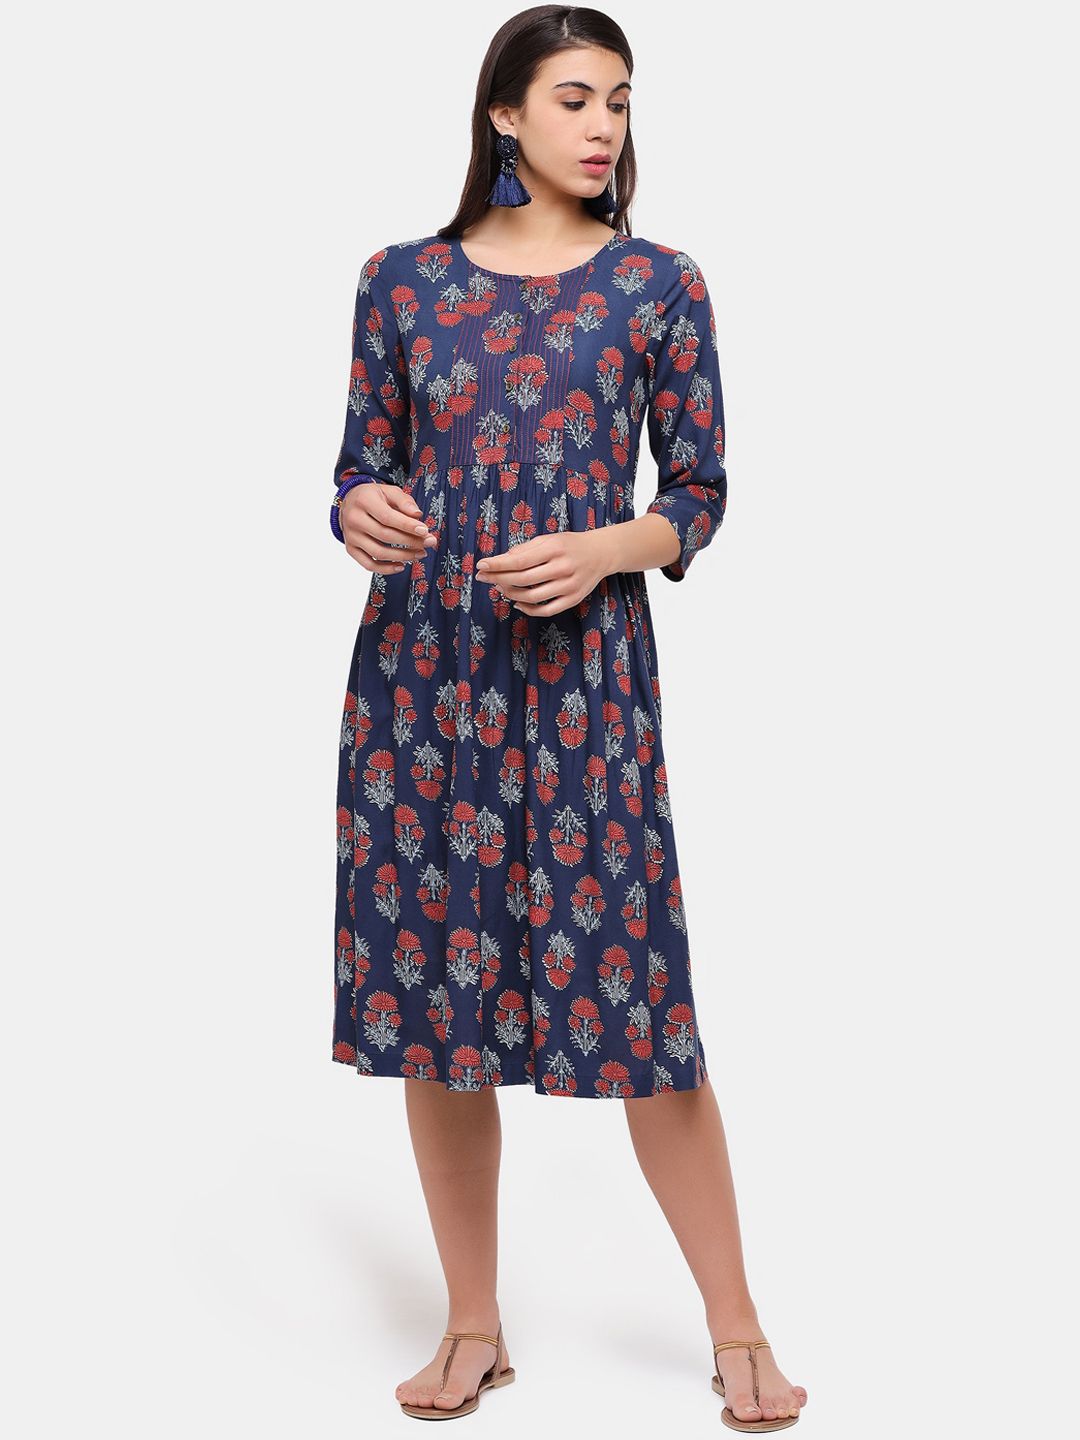 IMARA Blue Floral A-Line Midi Dress Price in India